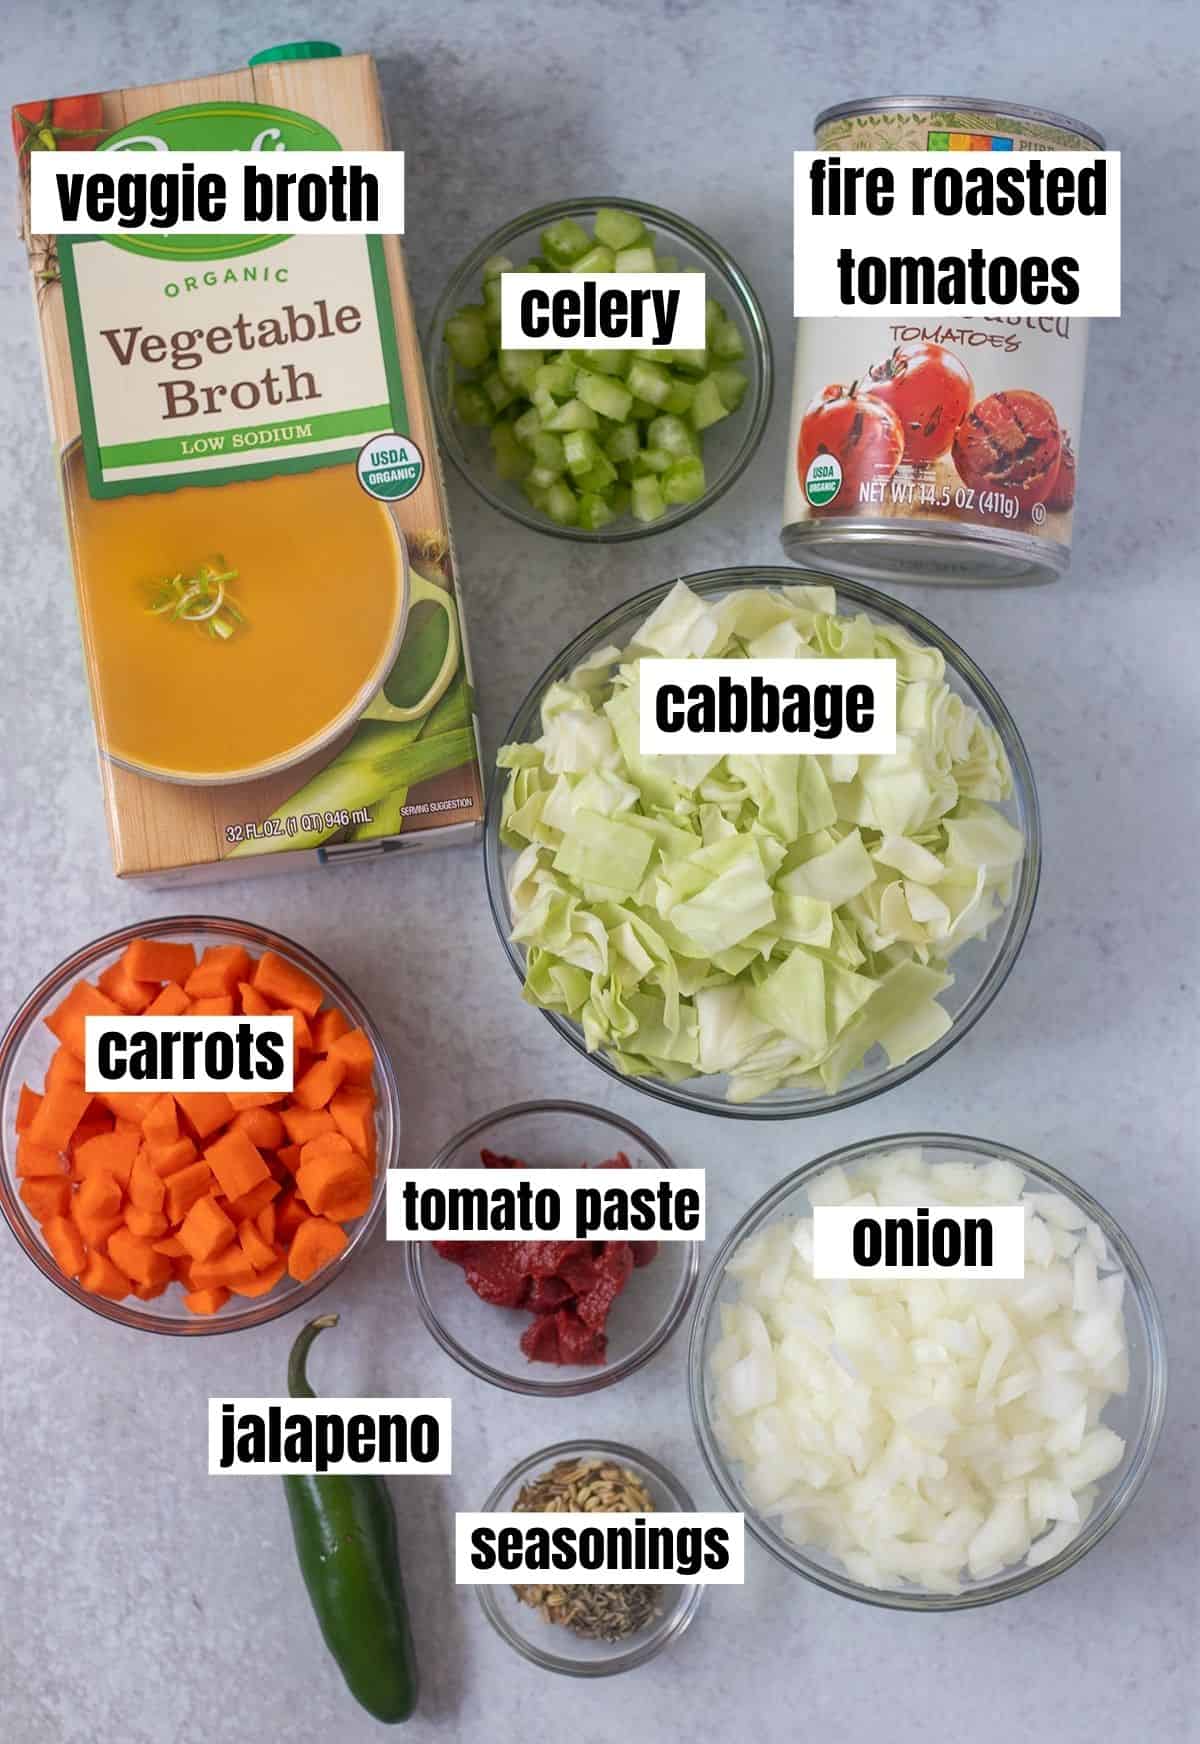 Vegetable broth, celery, fire roasted tomatoes, cabbage, carrots, tomato paste, onion, seasonings, jalapeno